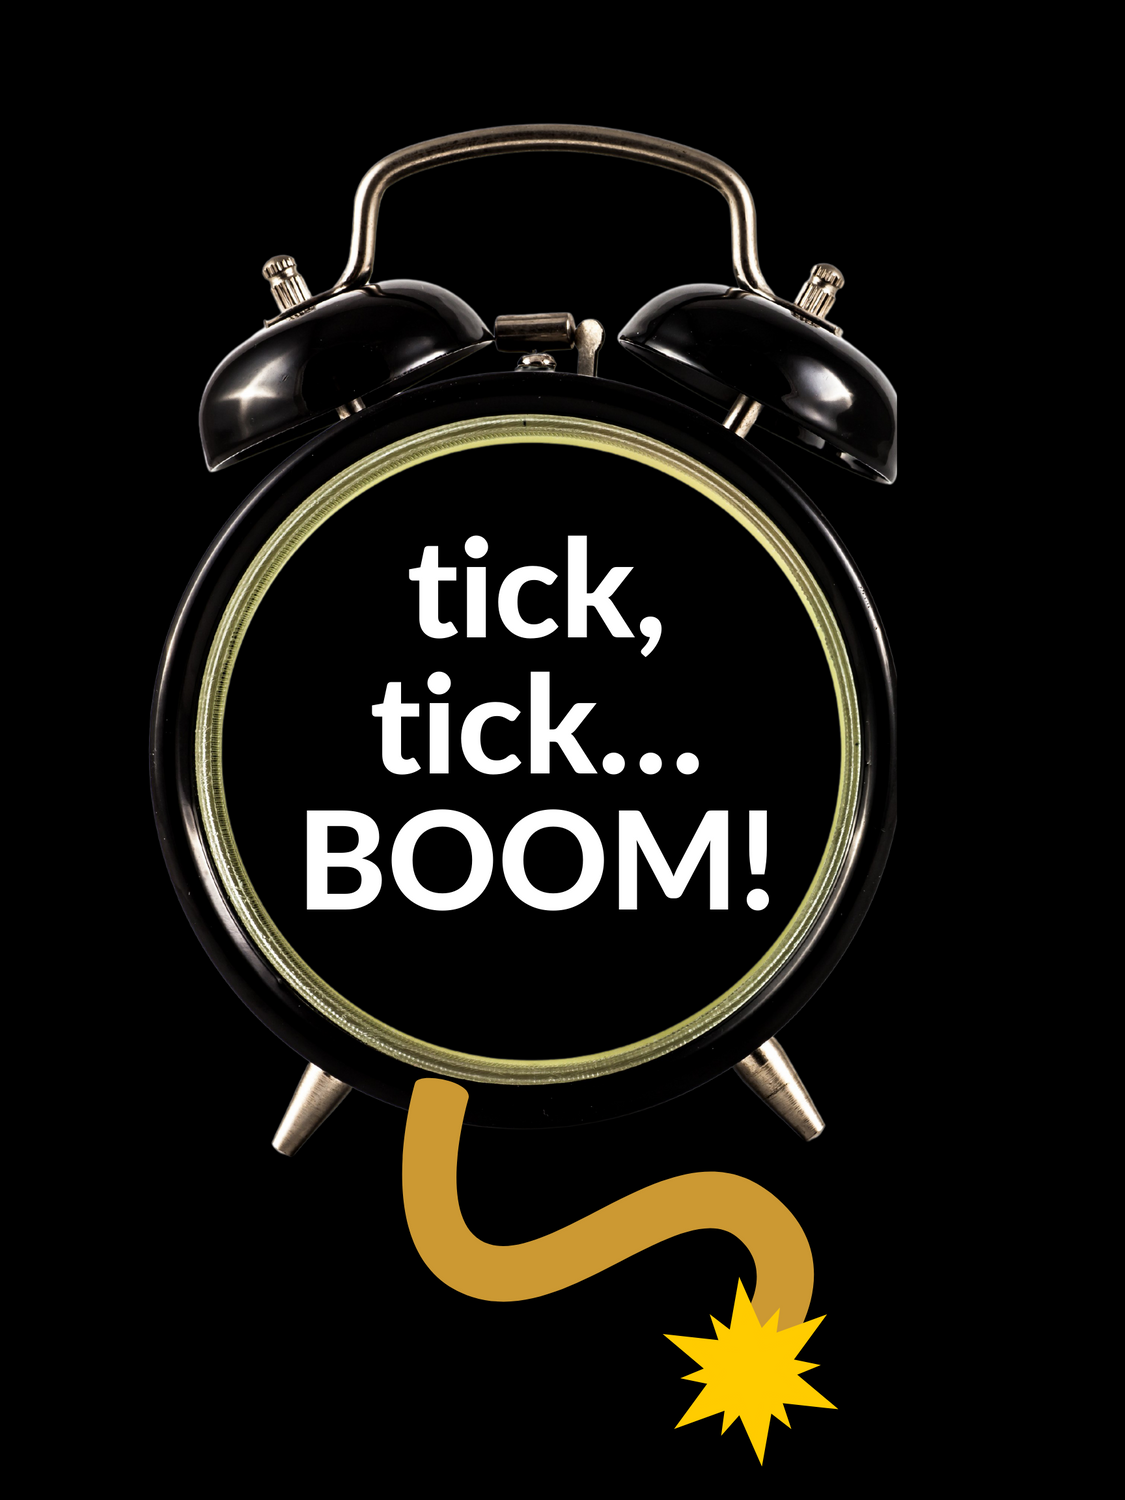 Tick, Tick Boom poster. Ticks, Boom, Poster